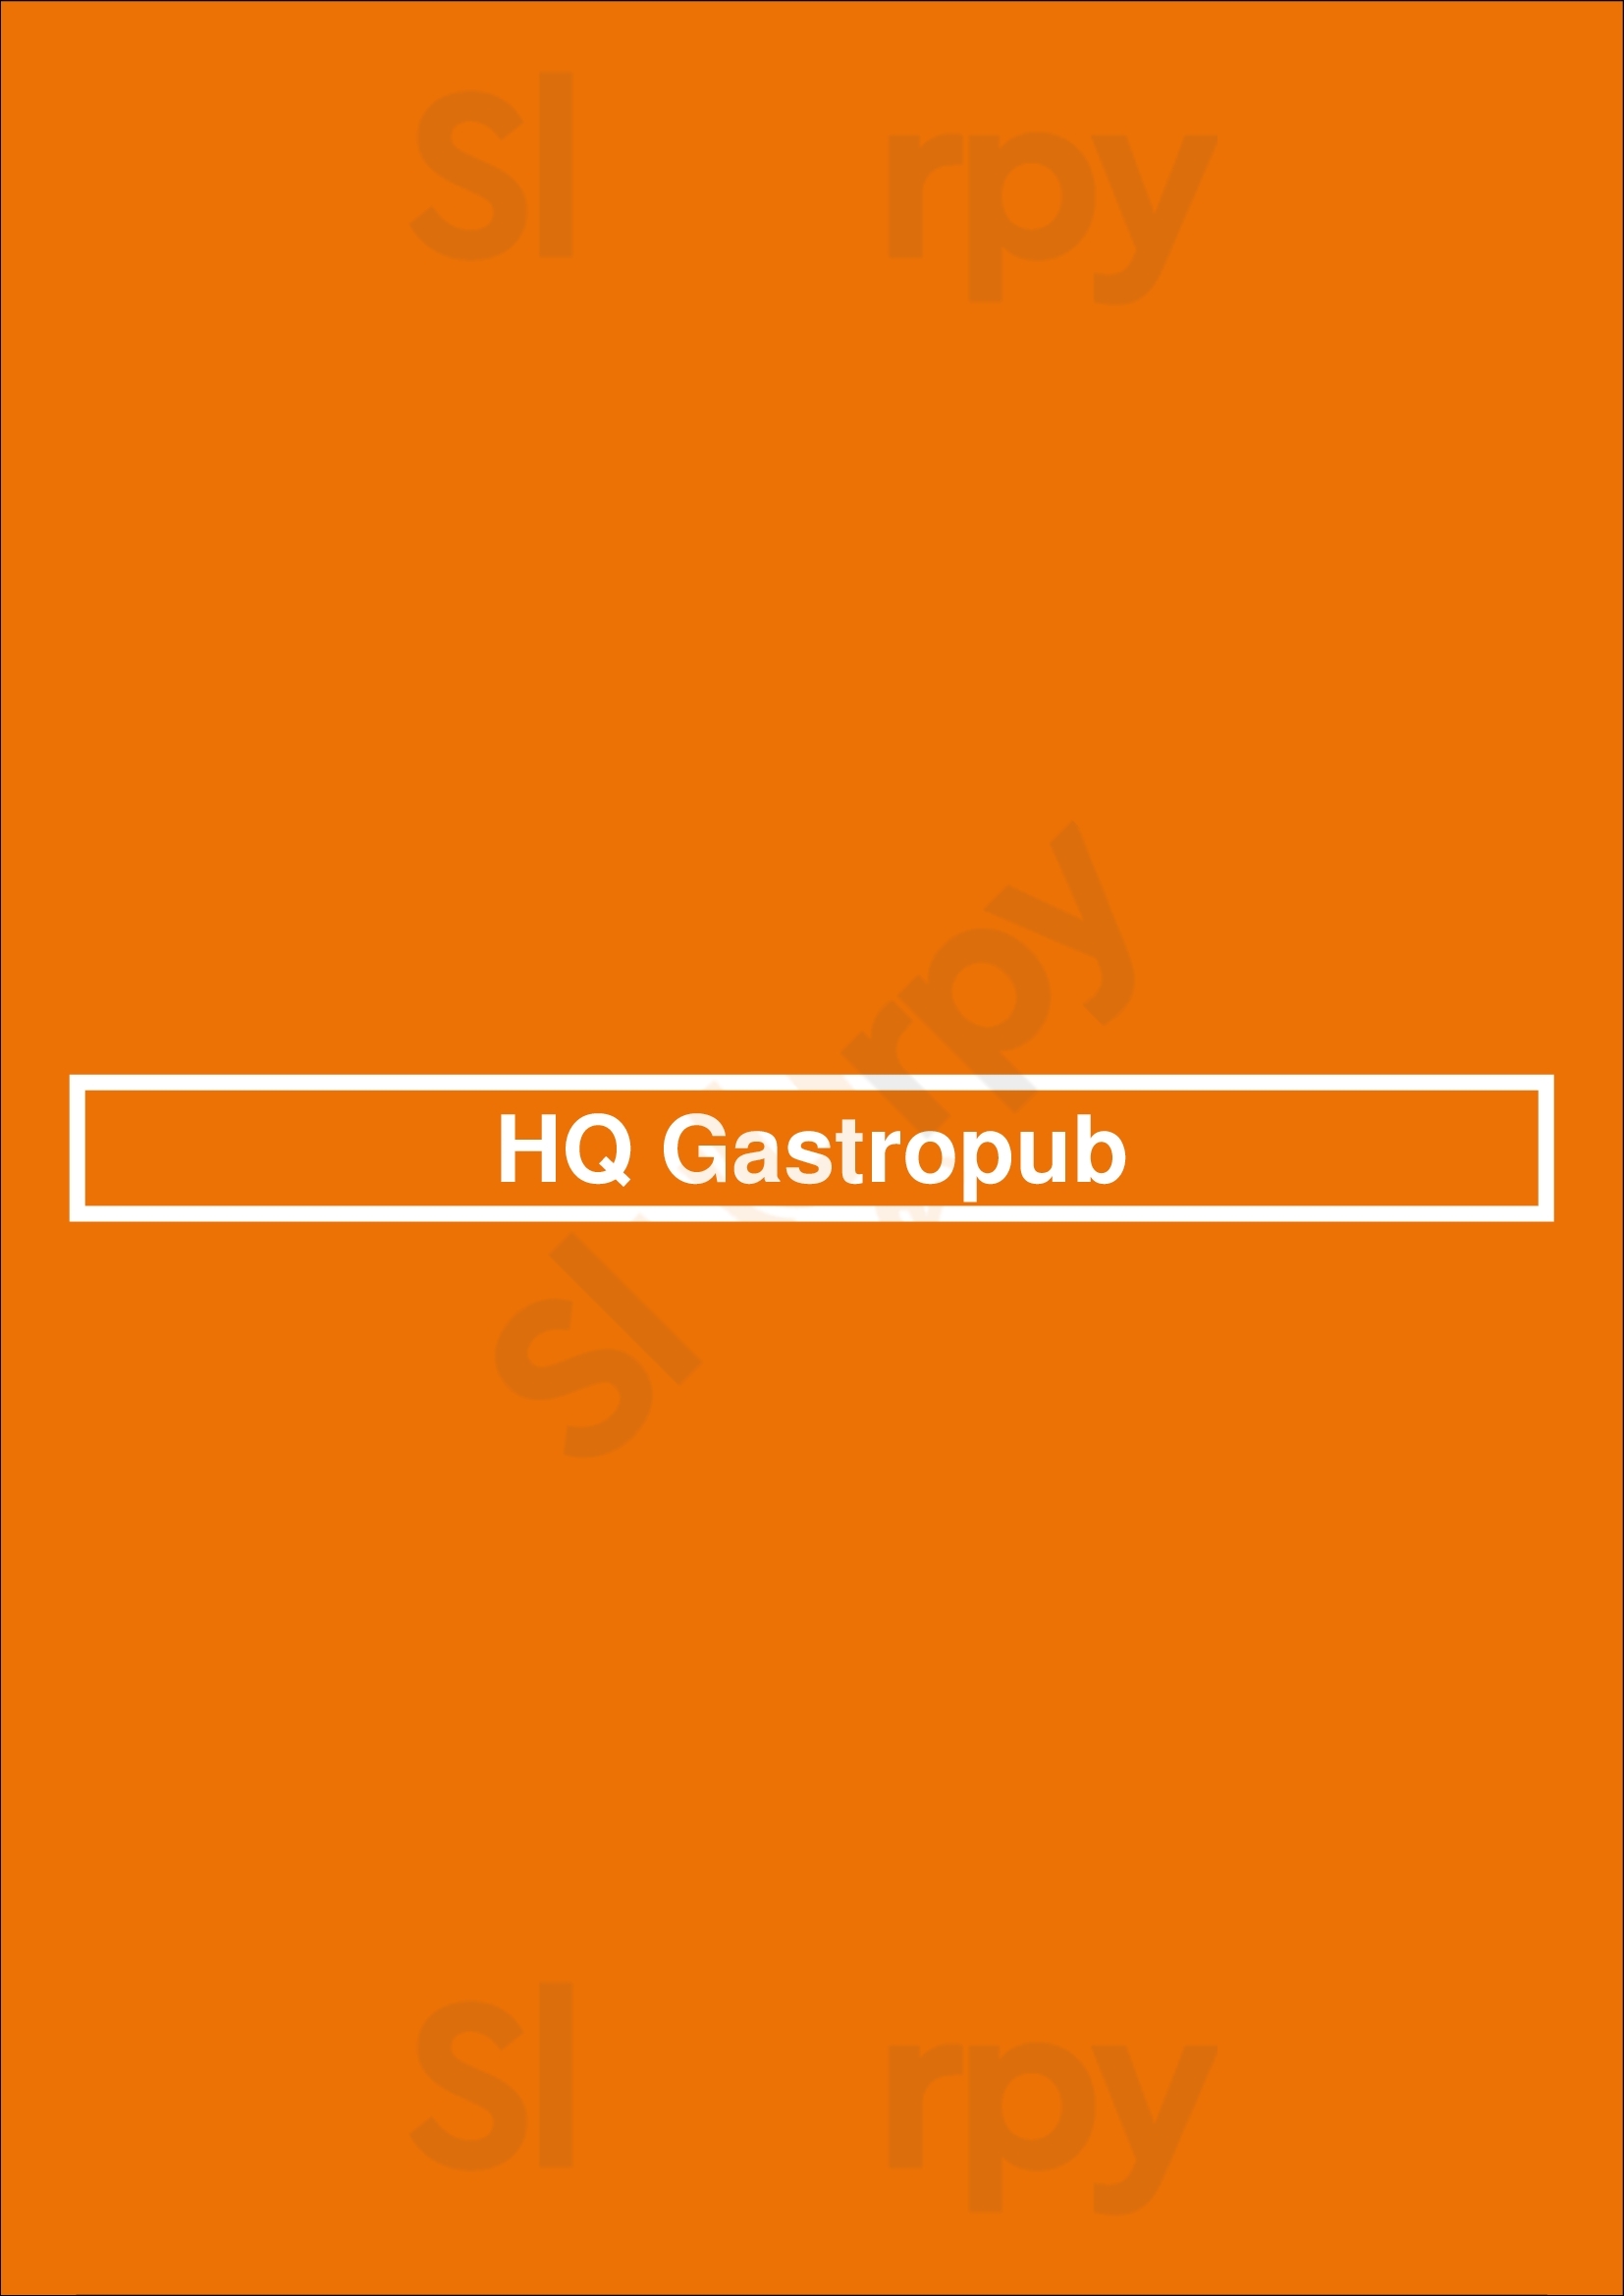 Hq Gastropub Huntington Beach Menu - 1